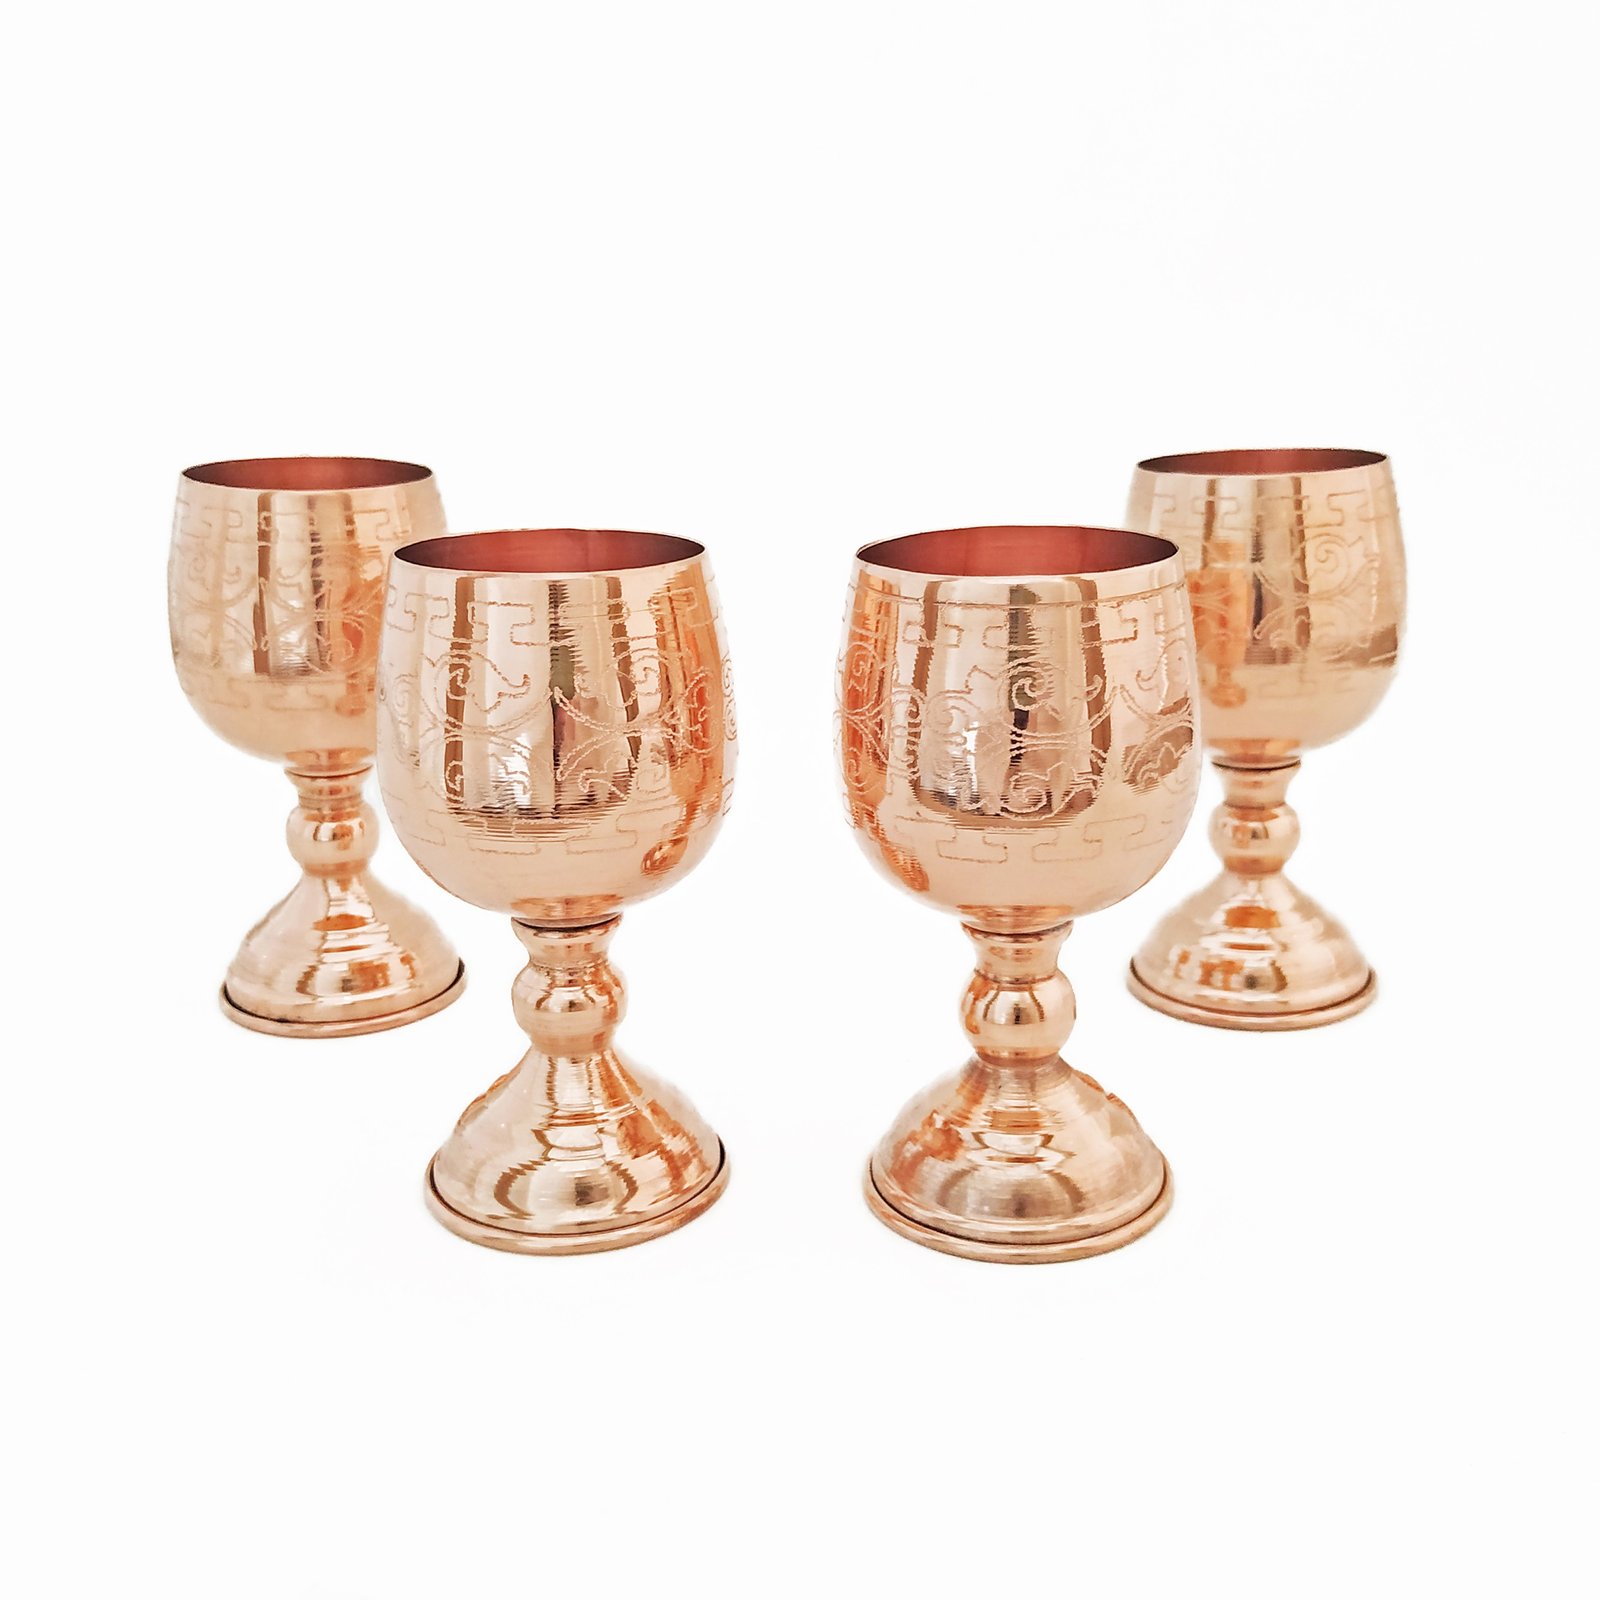 Handicraft Copper Cup engraving model set 4 pcs,구리 수공예품 구입,구리 가격,구리 접시 가격